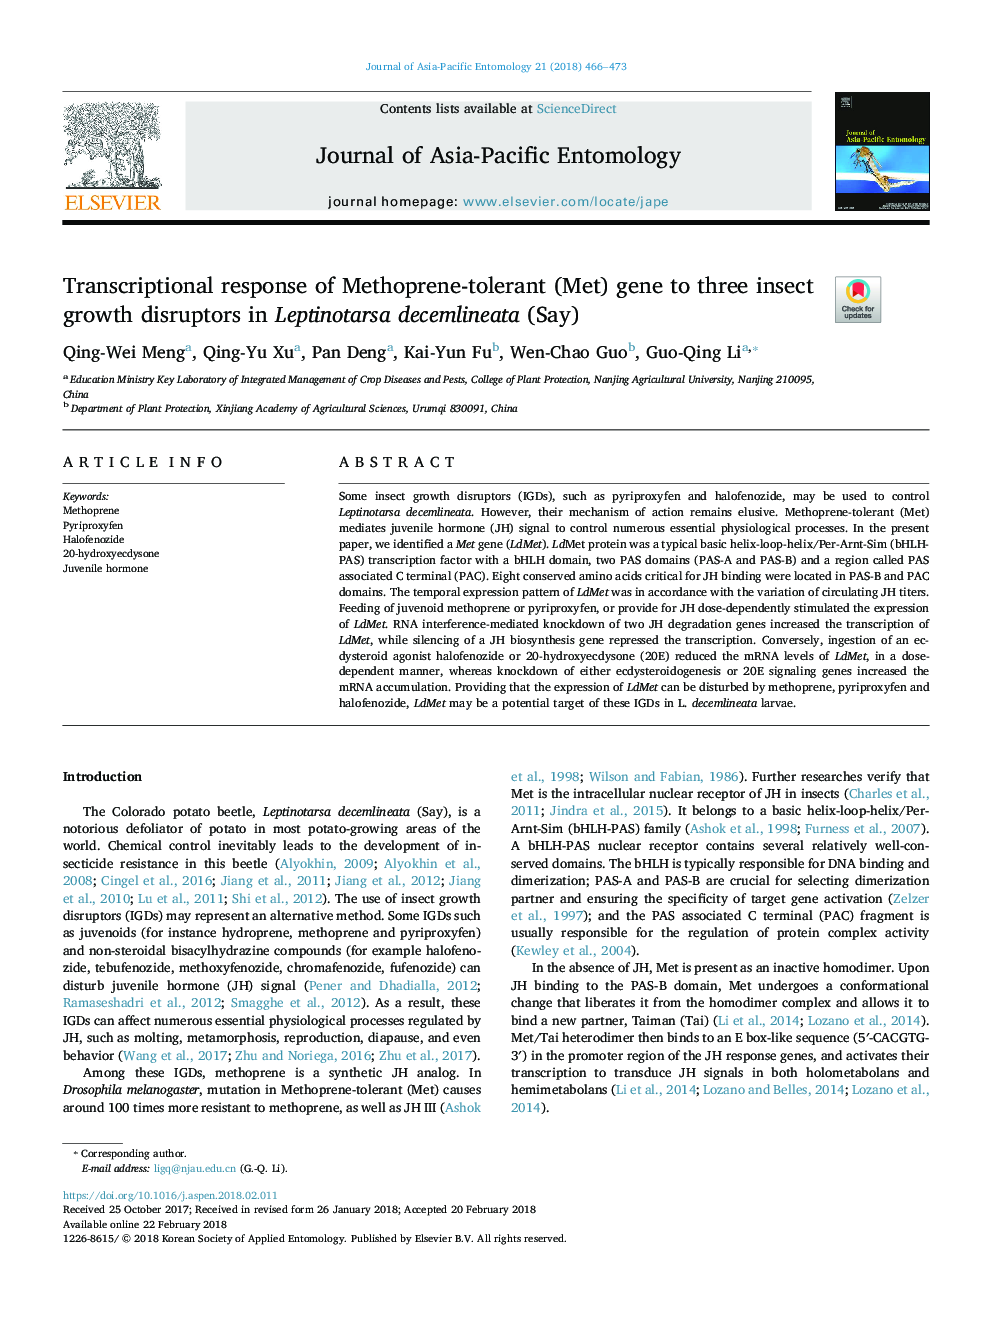 Transcriptional response of Methoprene-tolerant (Met) gene to three insect growth disruptors in Leptinotarsa decemlineata (Say)